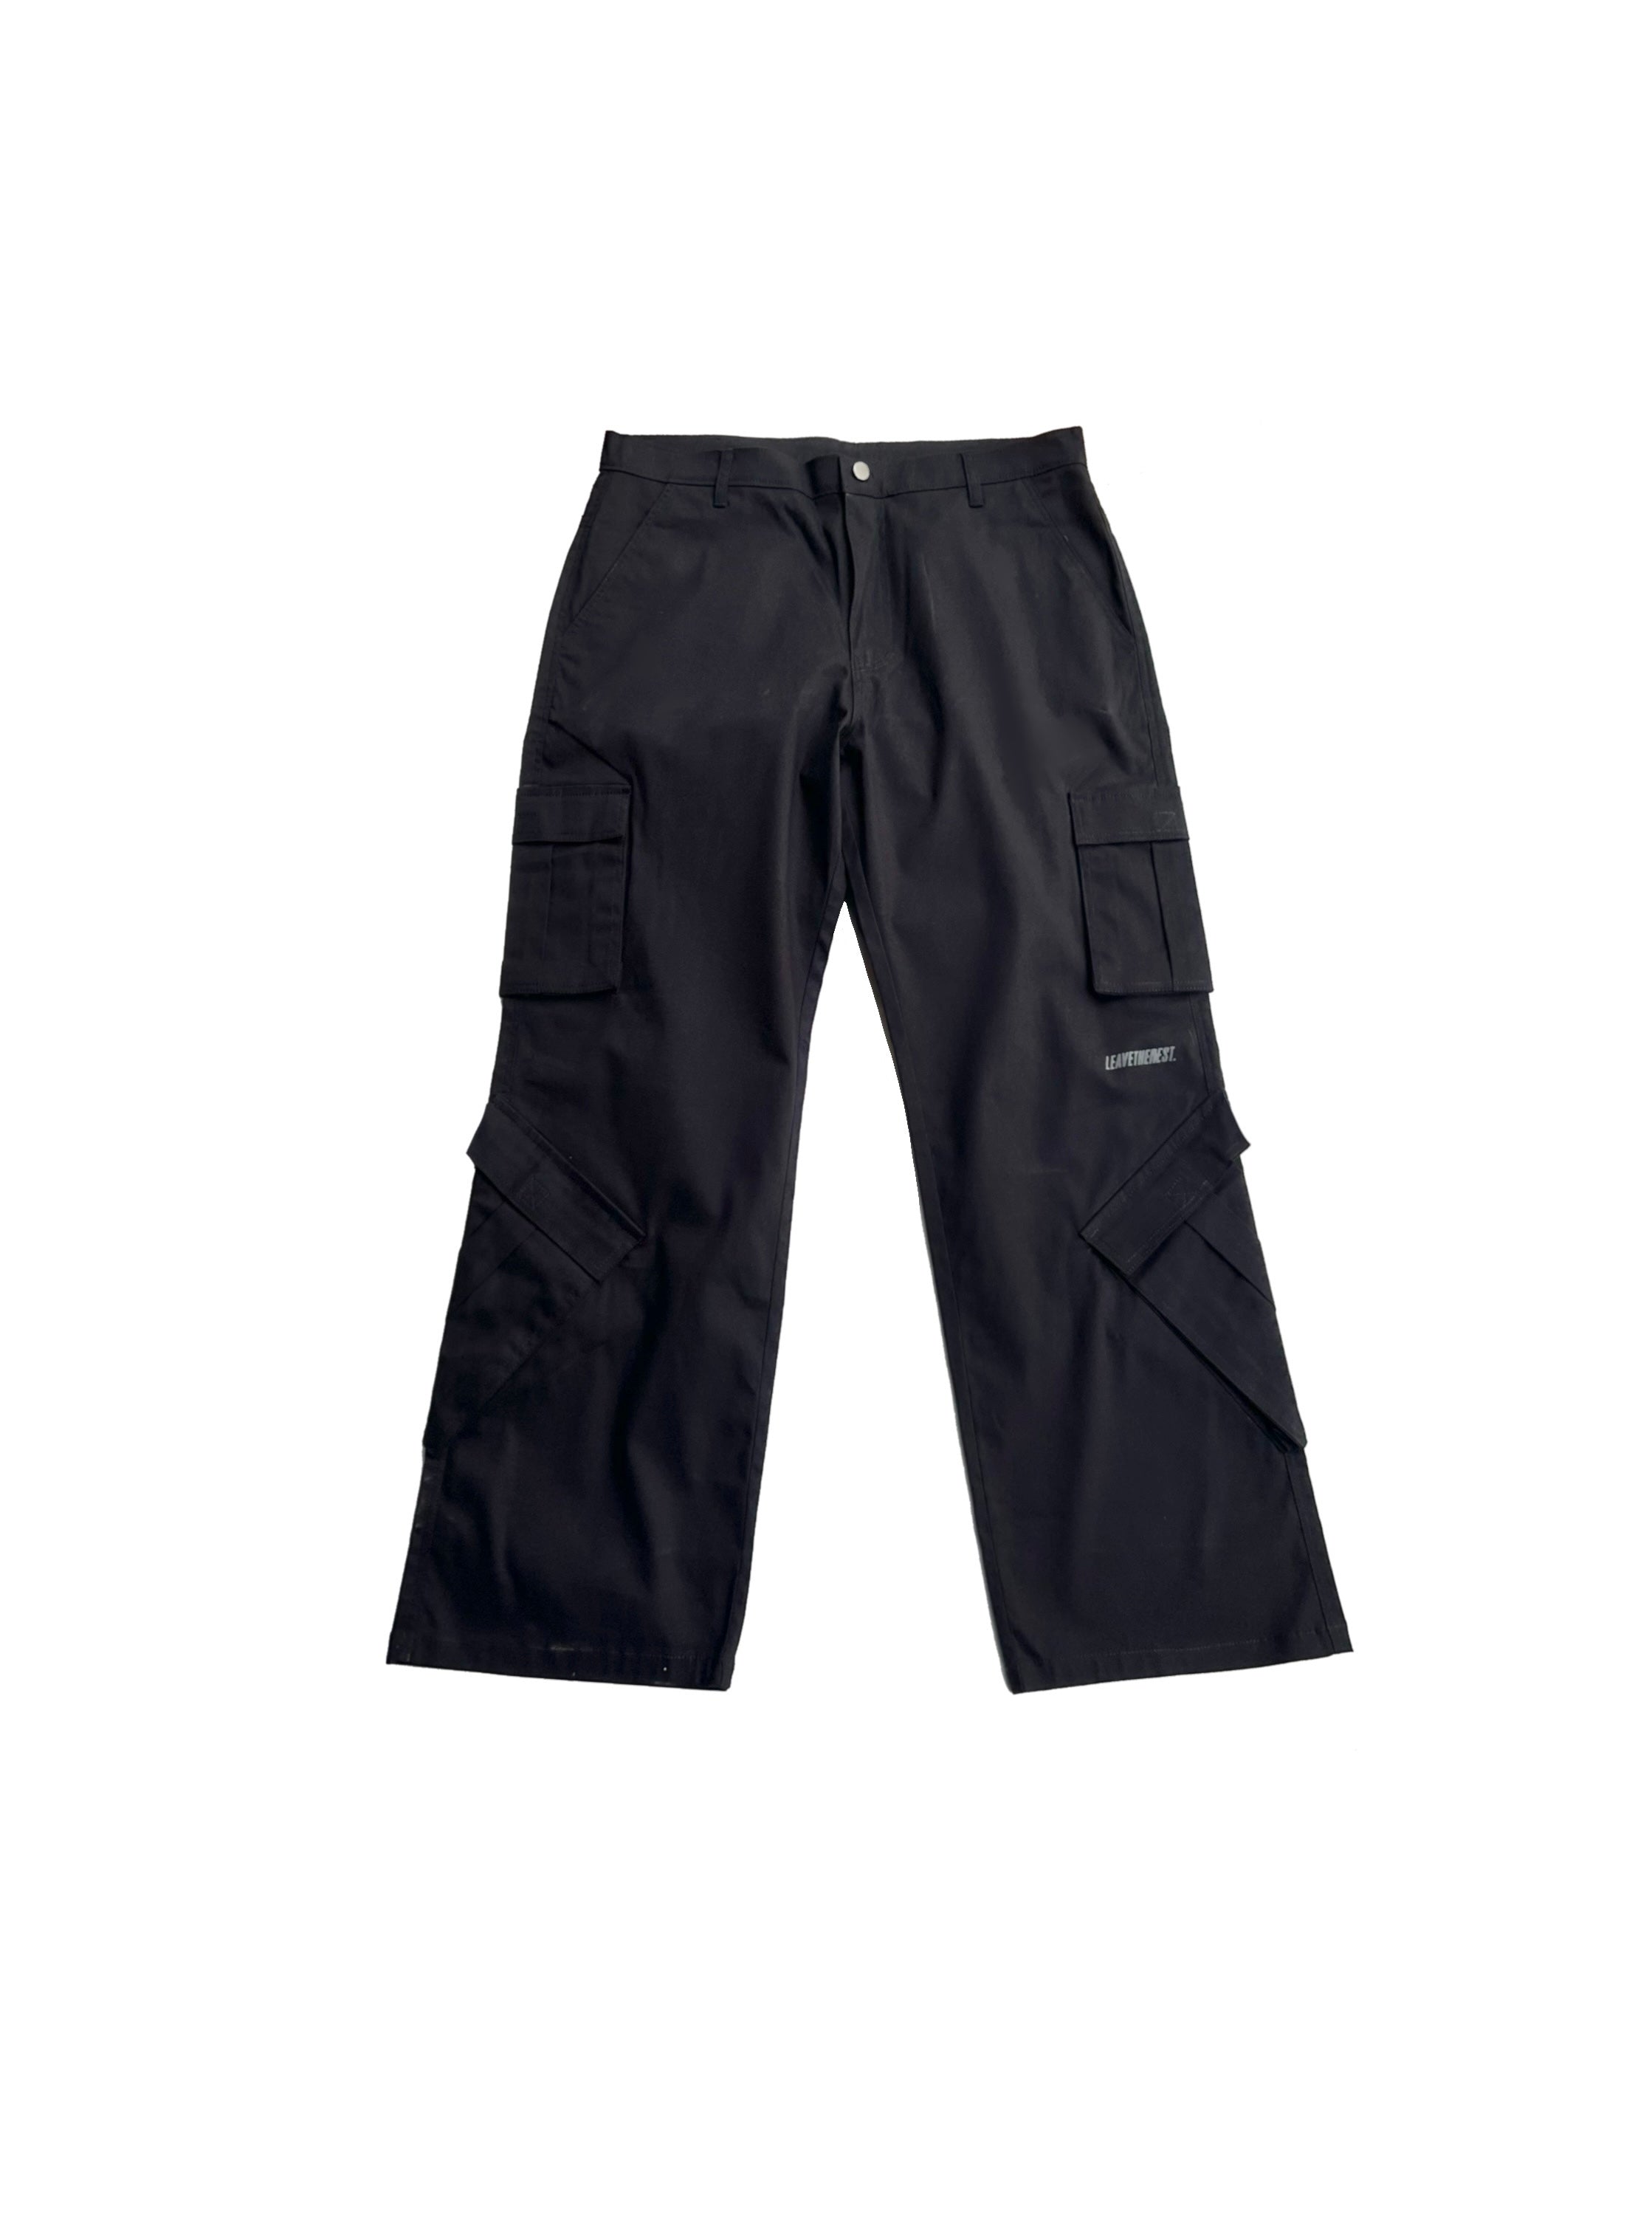 Buy Sapper 8 Pocket Cargo Pants for Men - Black online